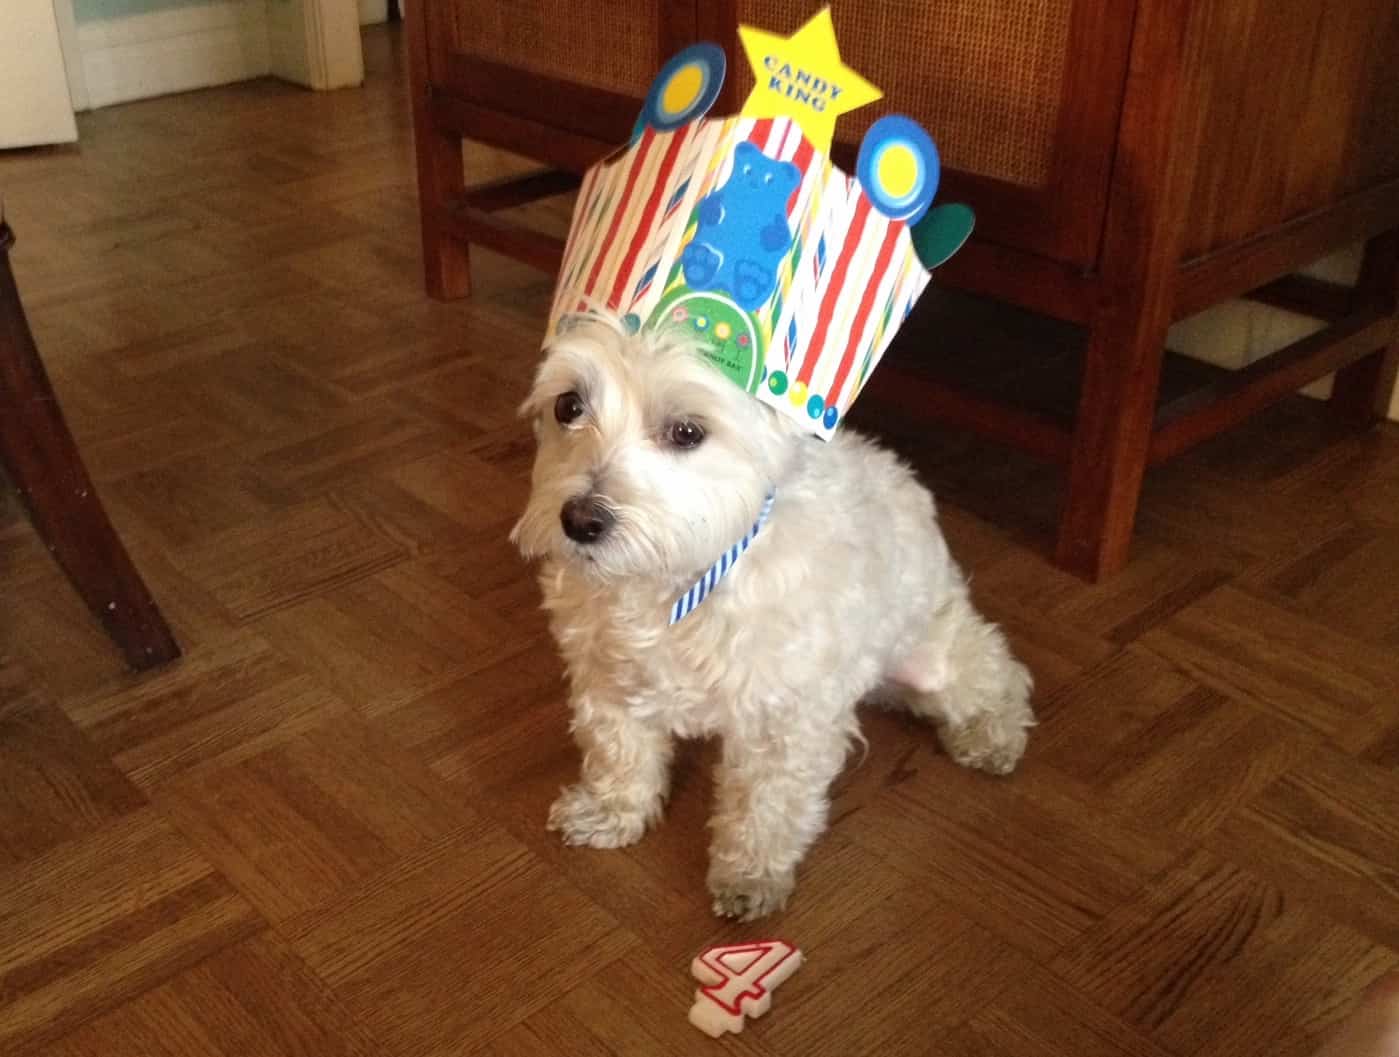 Holmes with his celebratory birthday hat.